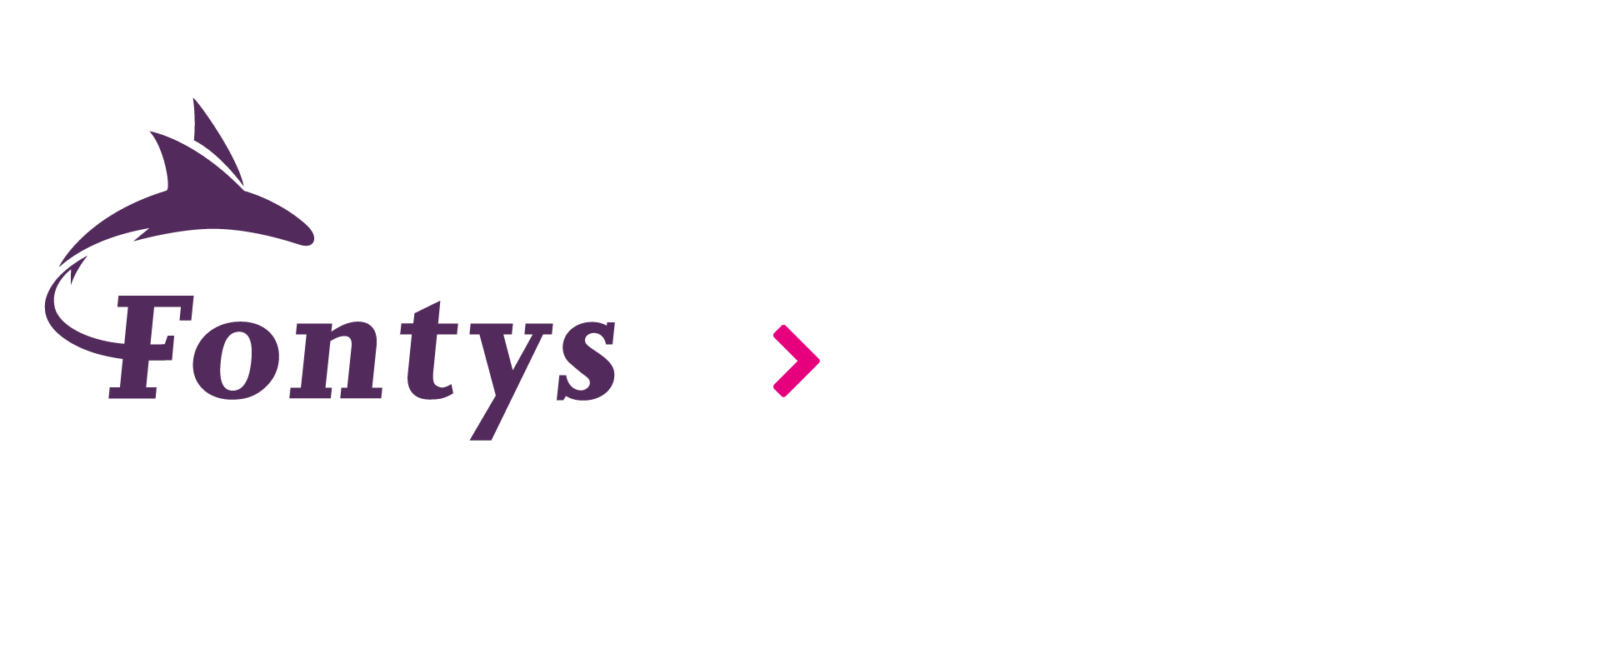 fontys-for-society-logo-3